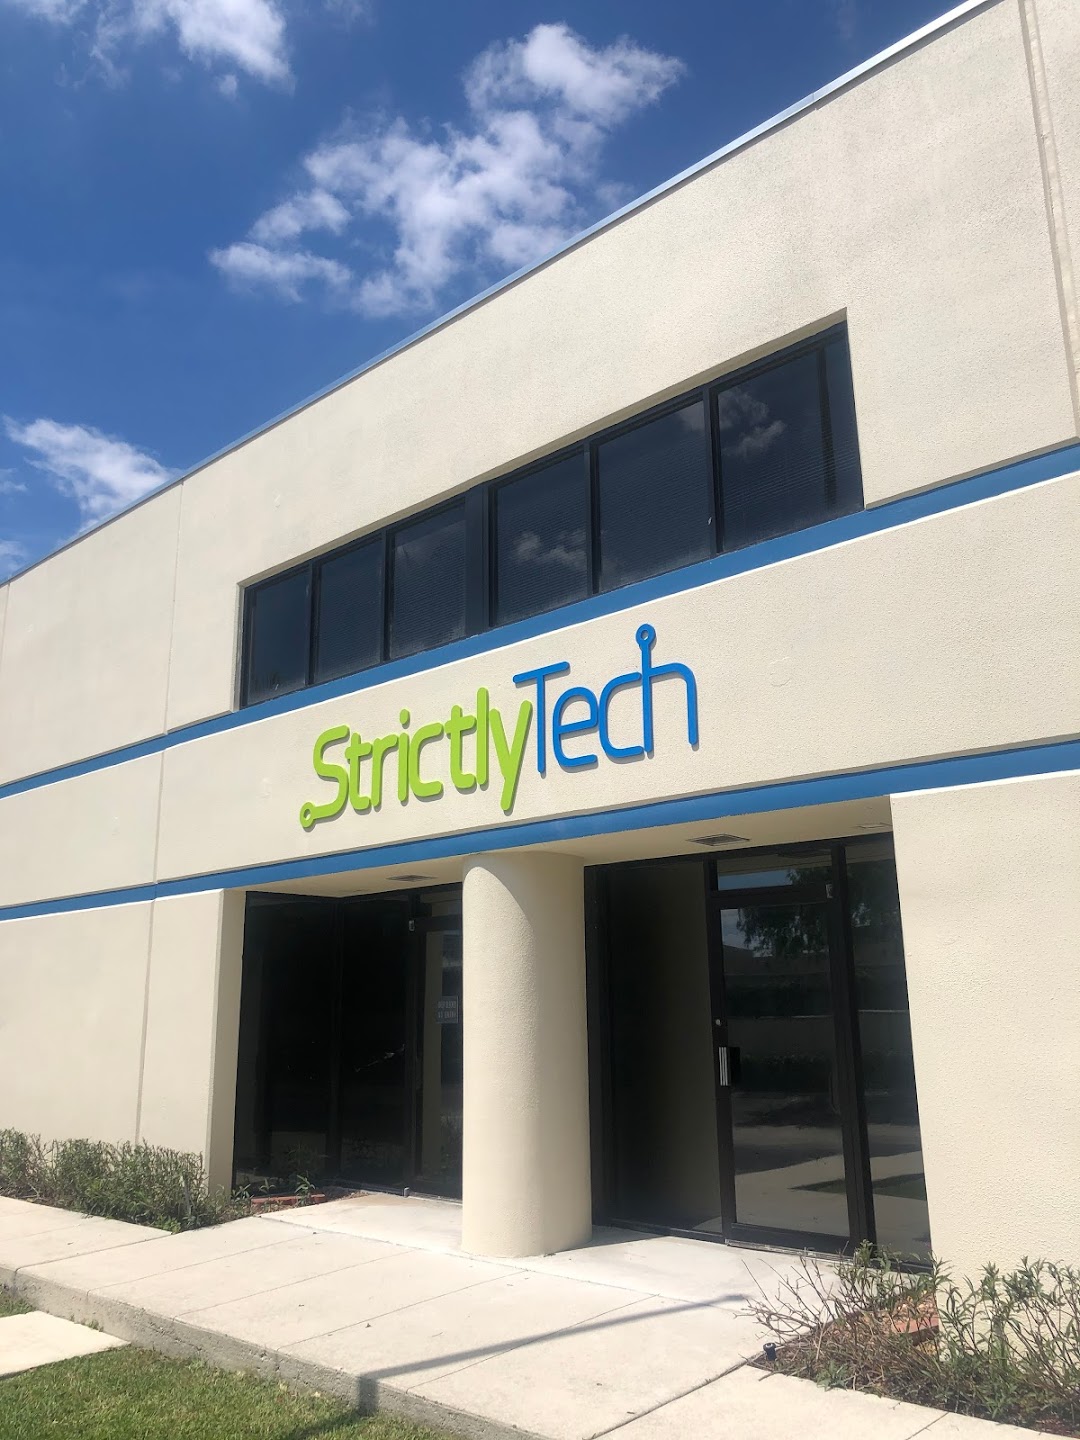 Strictly Technology LLC